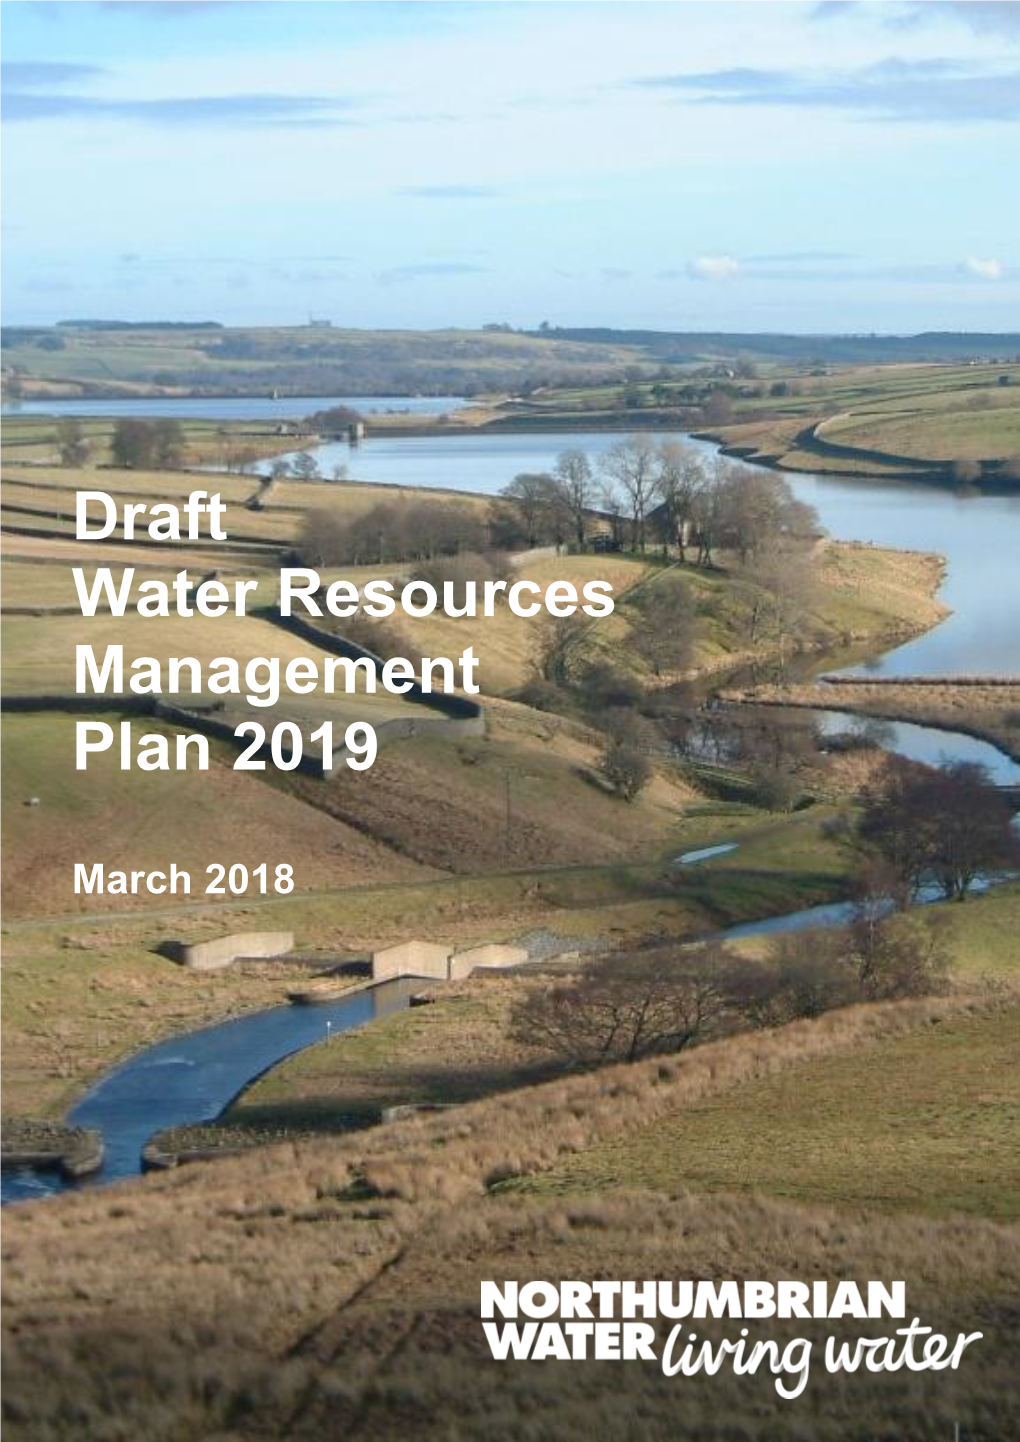 Draft Water Resources Management Plan 2019